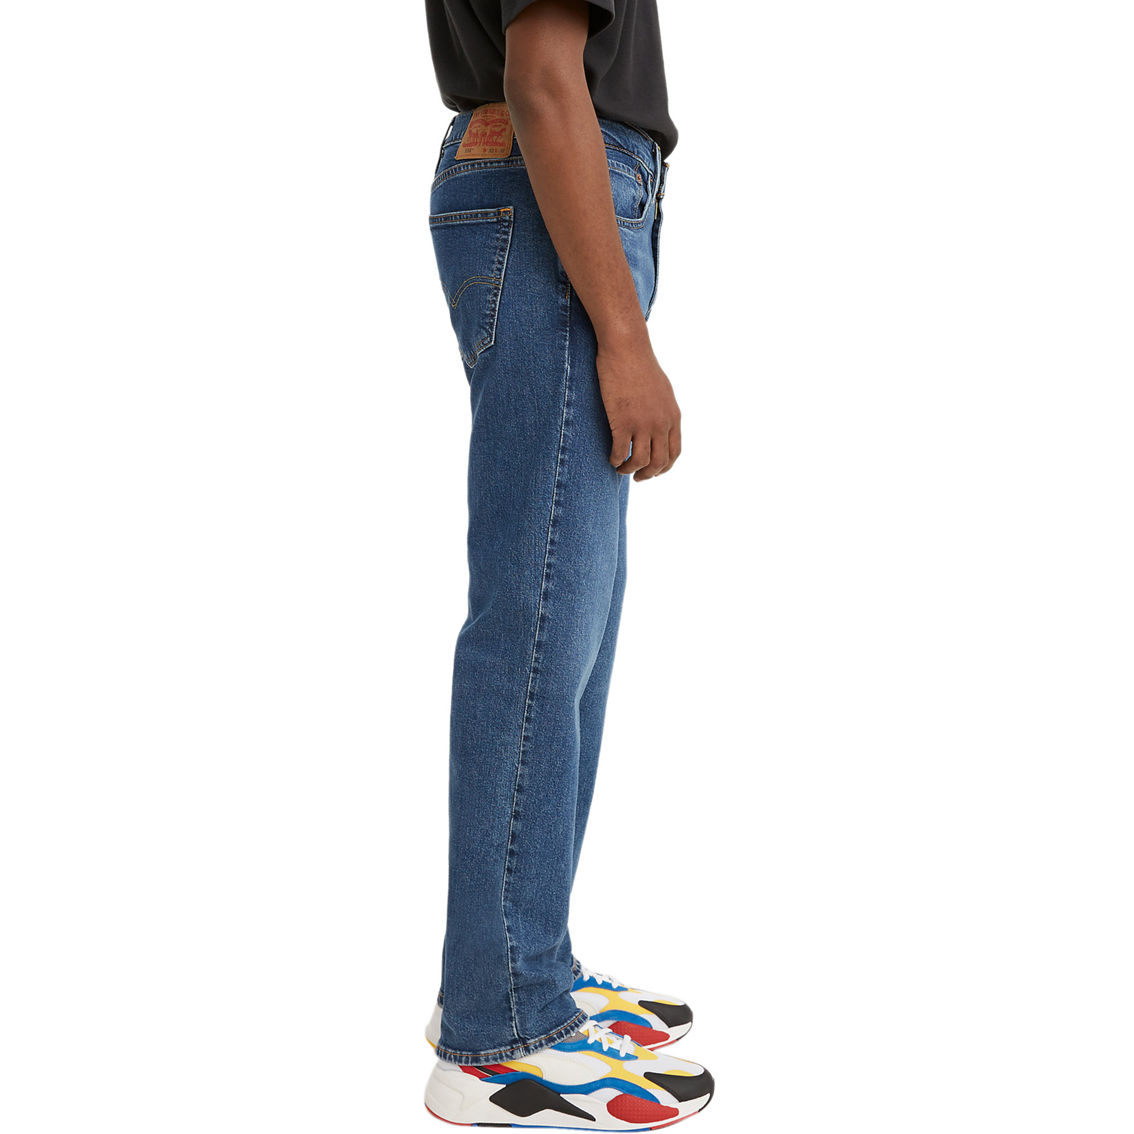 Levi's 514 Straight Fit Flex Jeans - Image 3 of 3